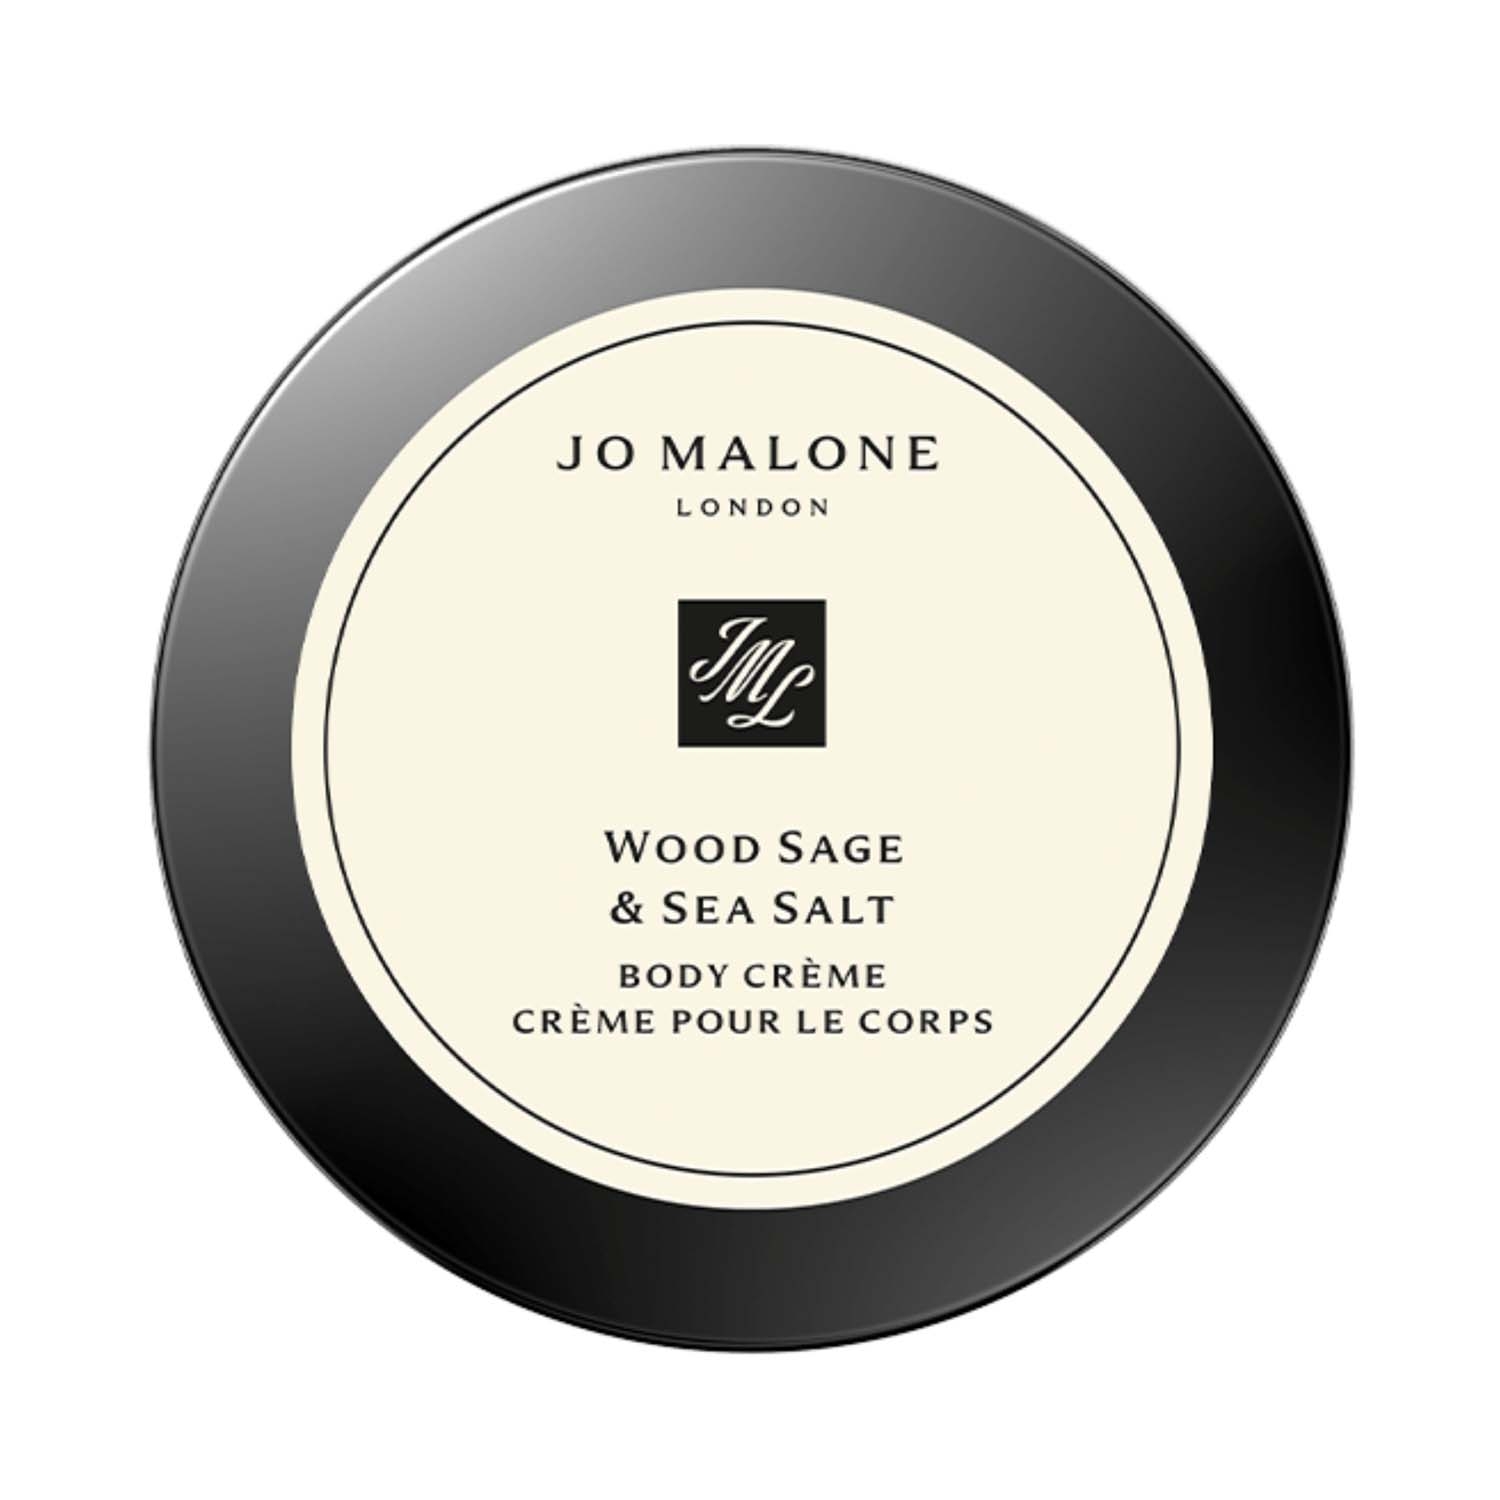 Jo Malone London | Jo Malone London Wood Sage & Sea Salt Body Creme (50ml)